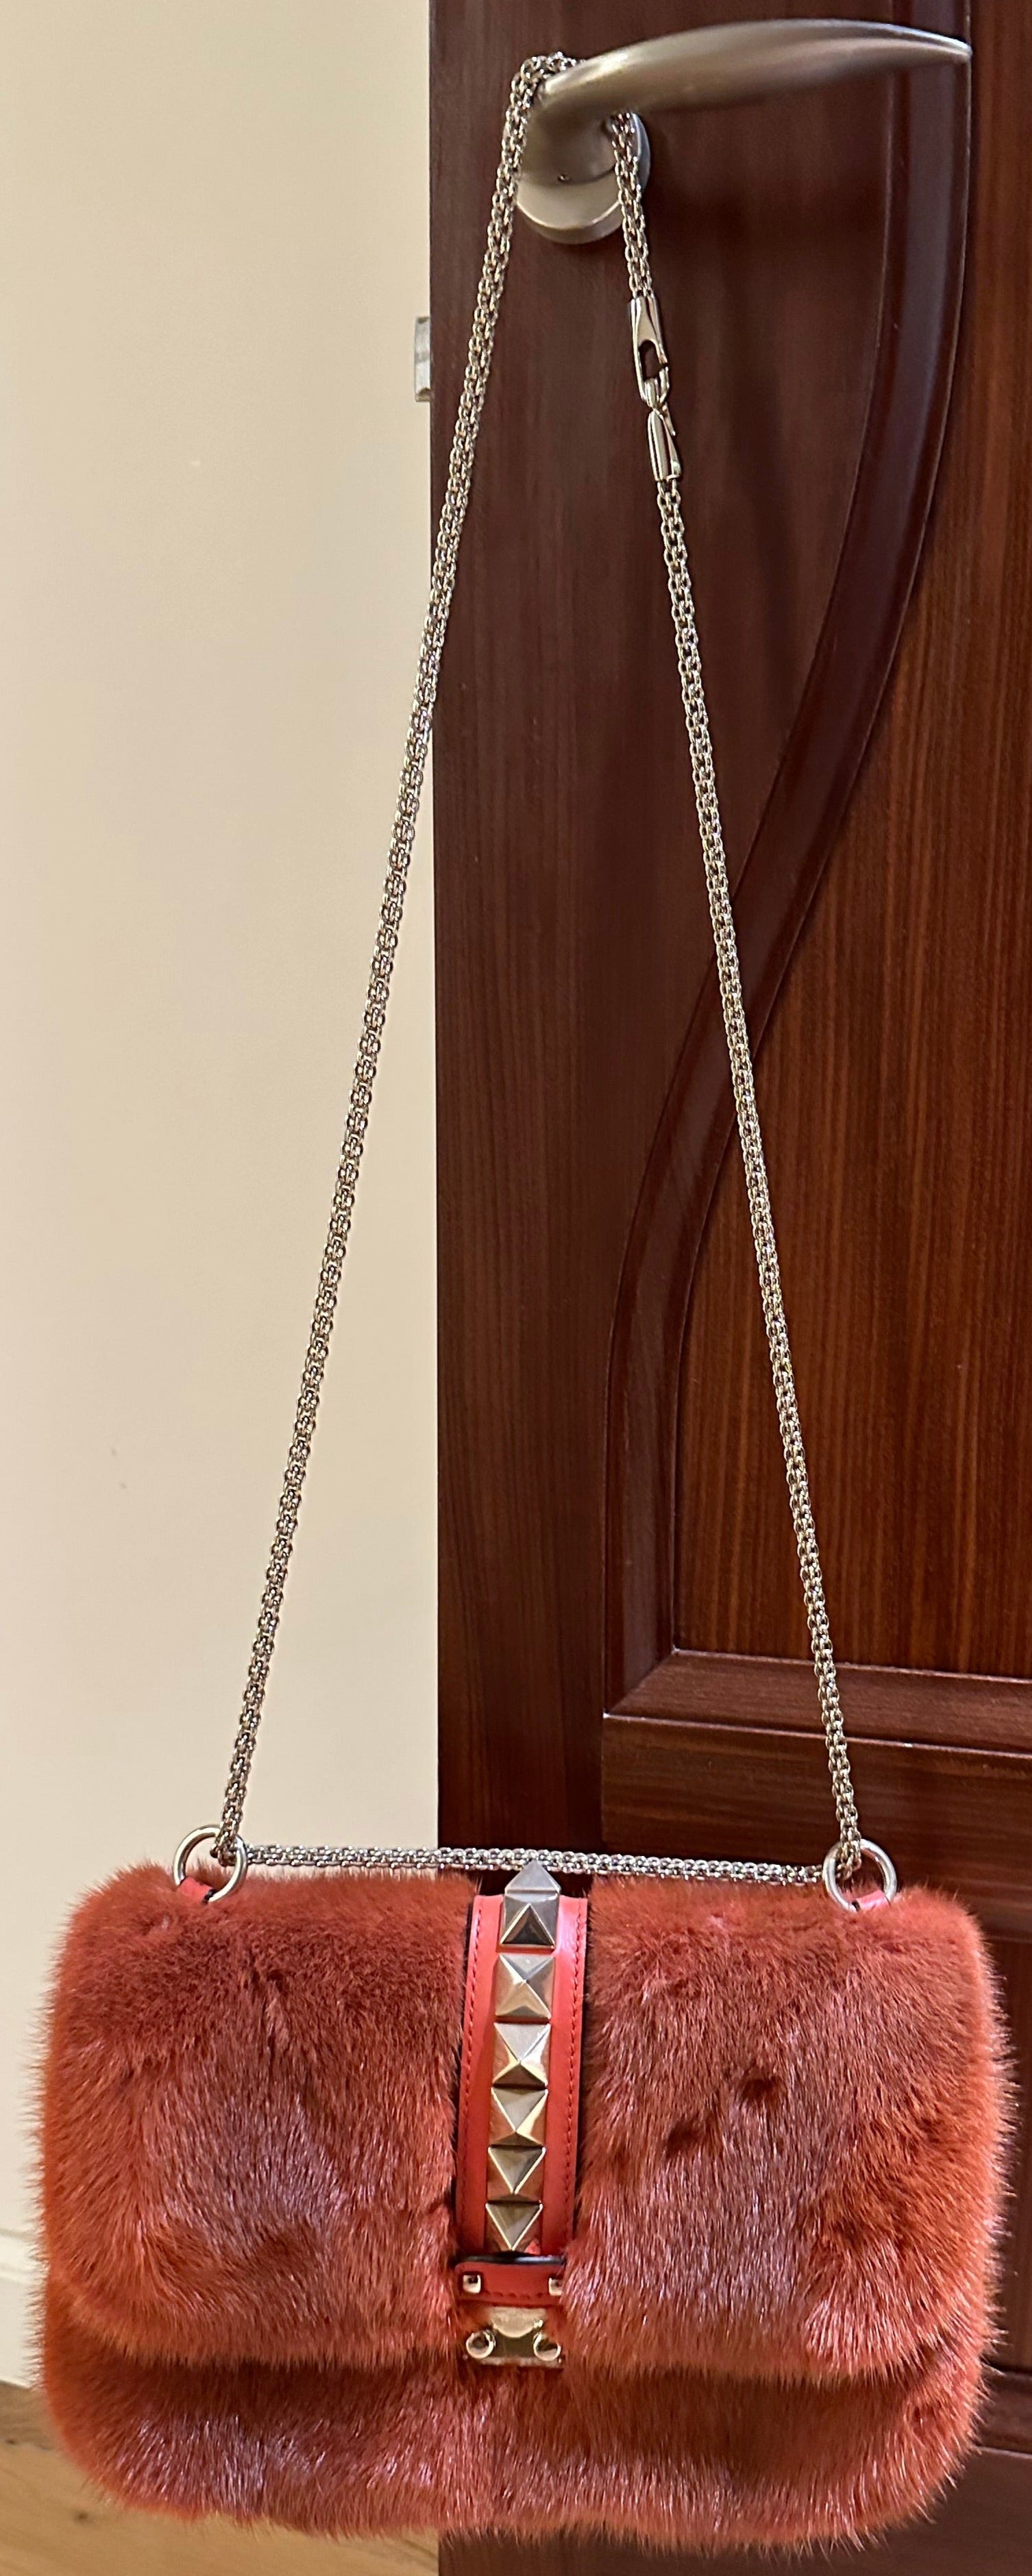 VALENTINO GARAVANI mink shoulder bag with gold-tone chain strap